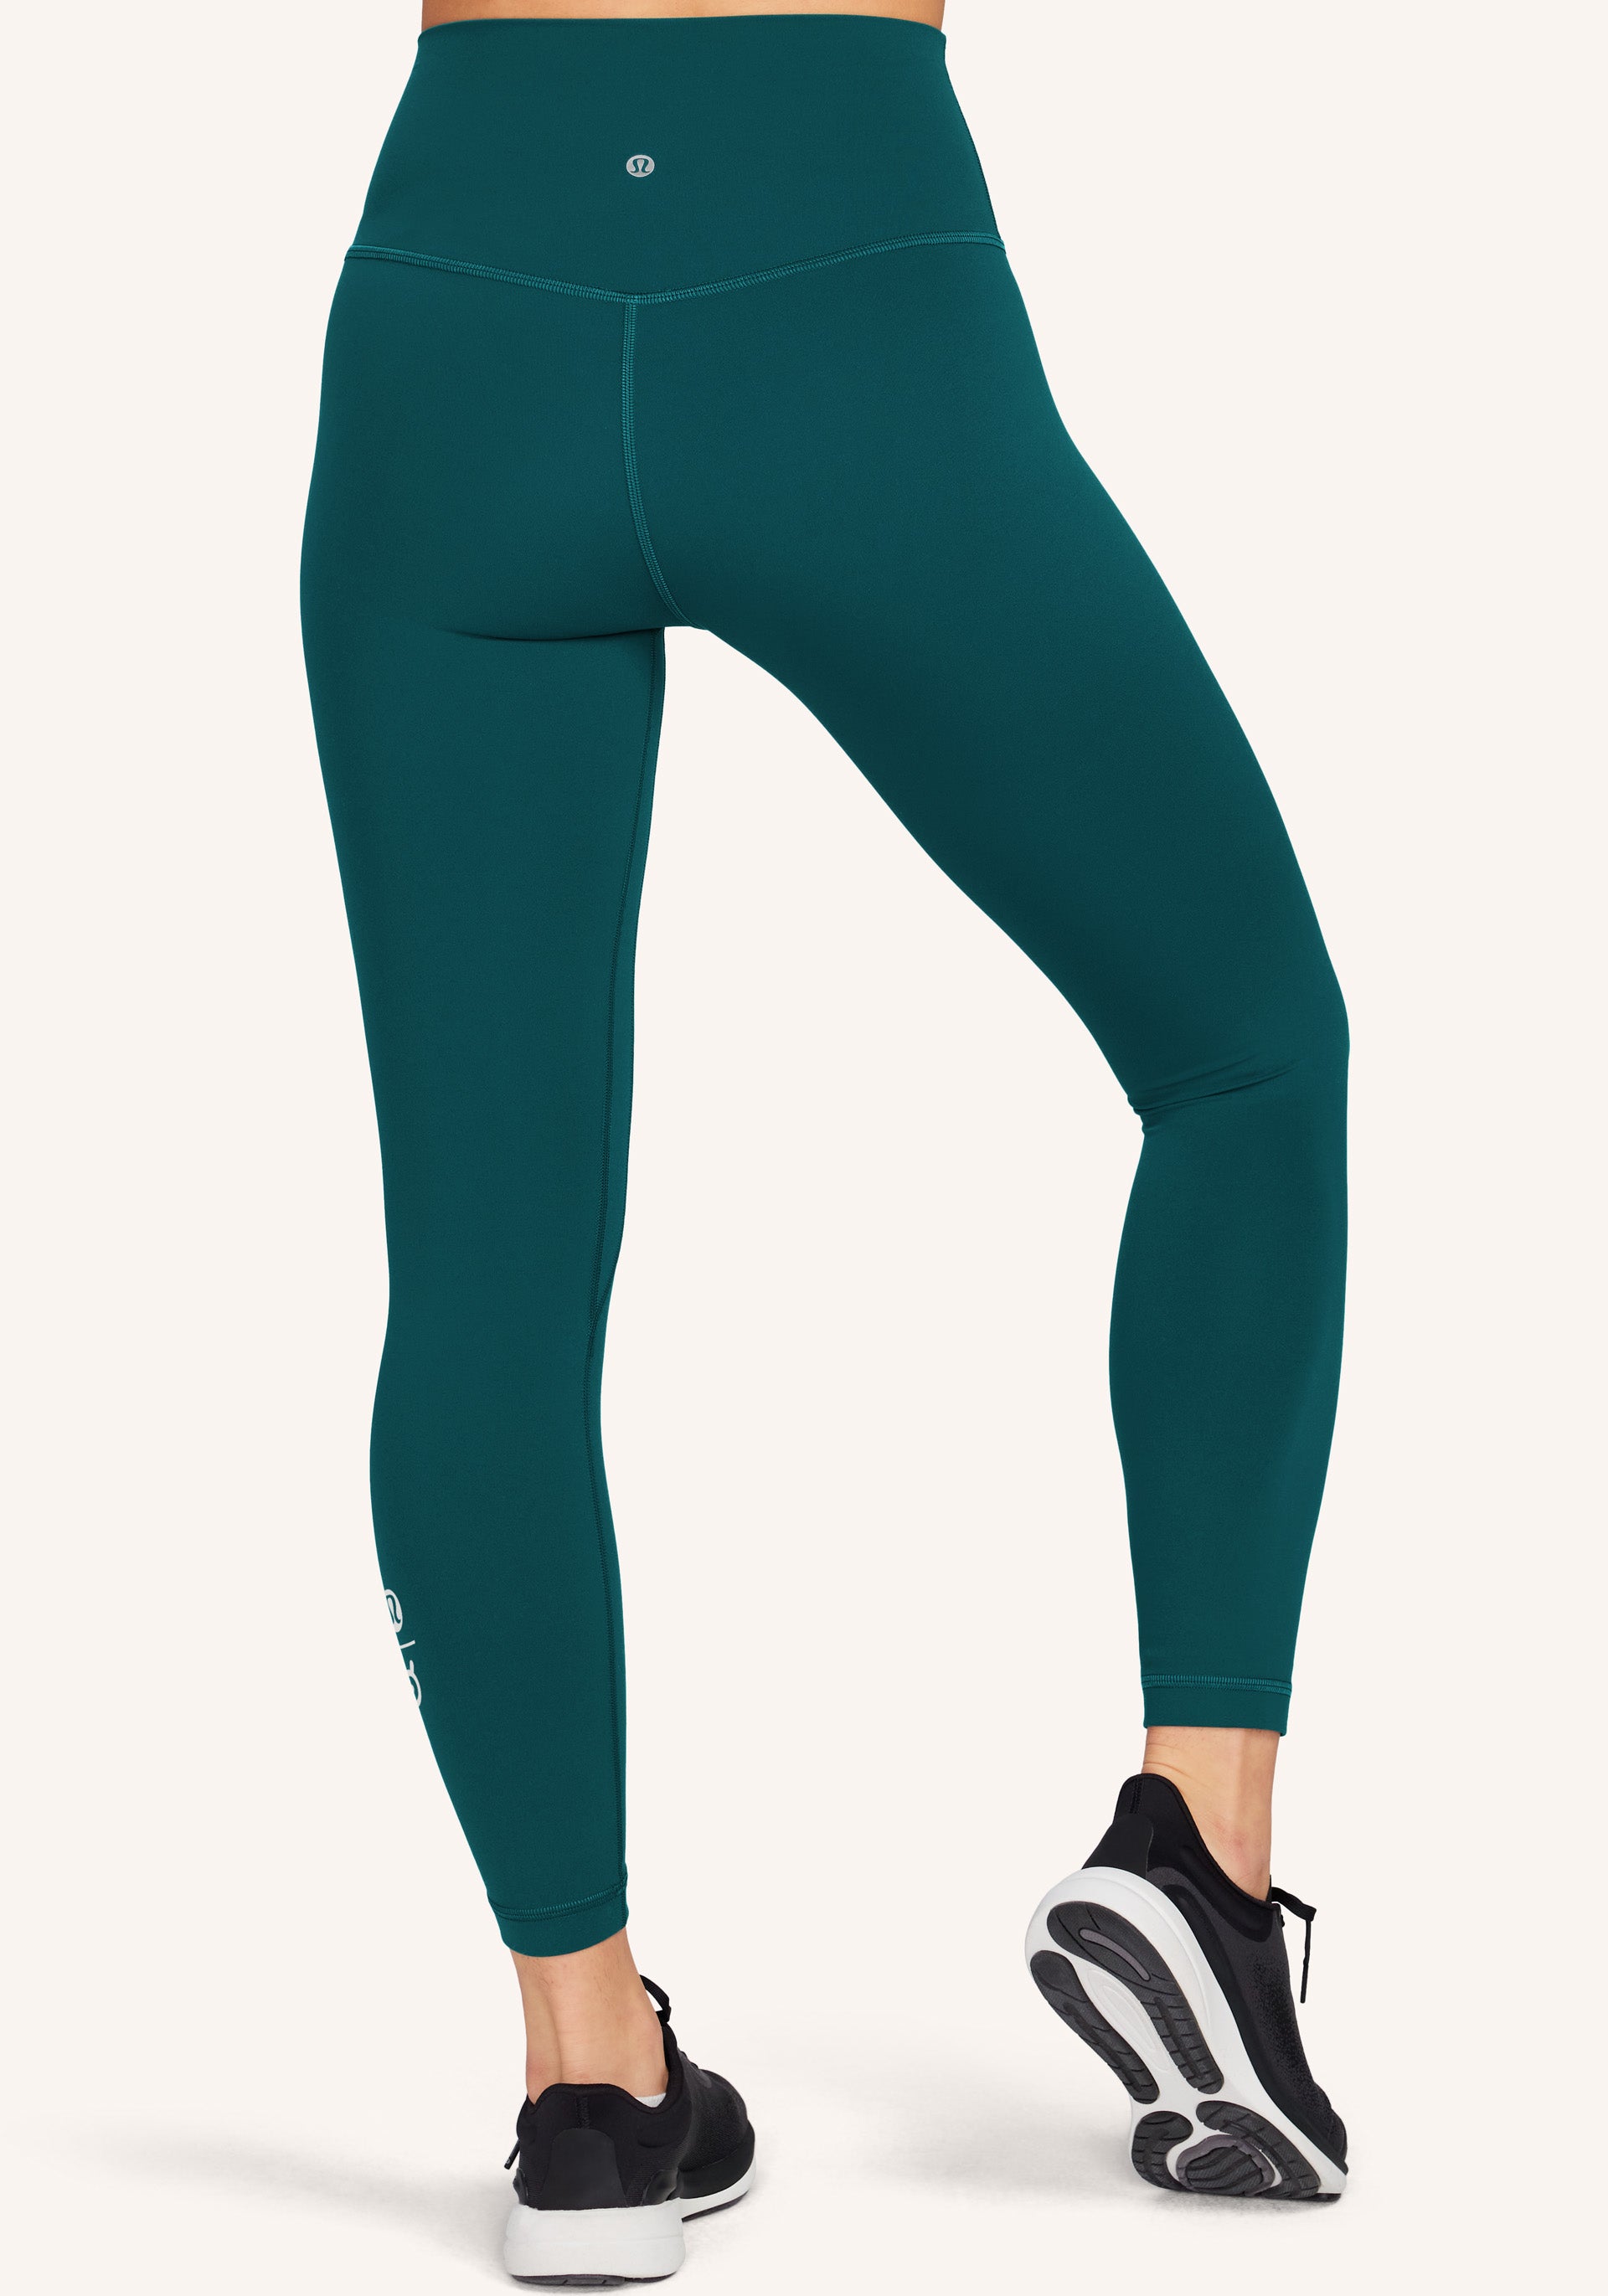 lululemon align leggings size 4 - Athletic apparel